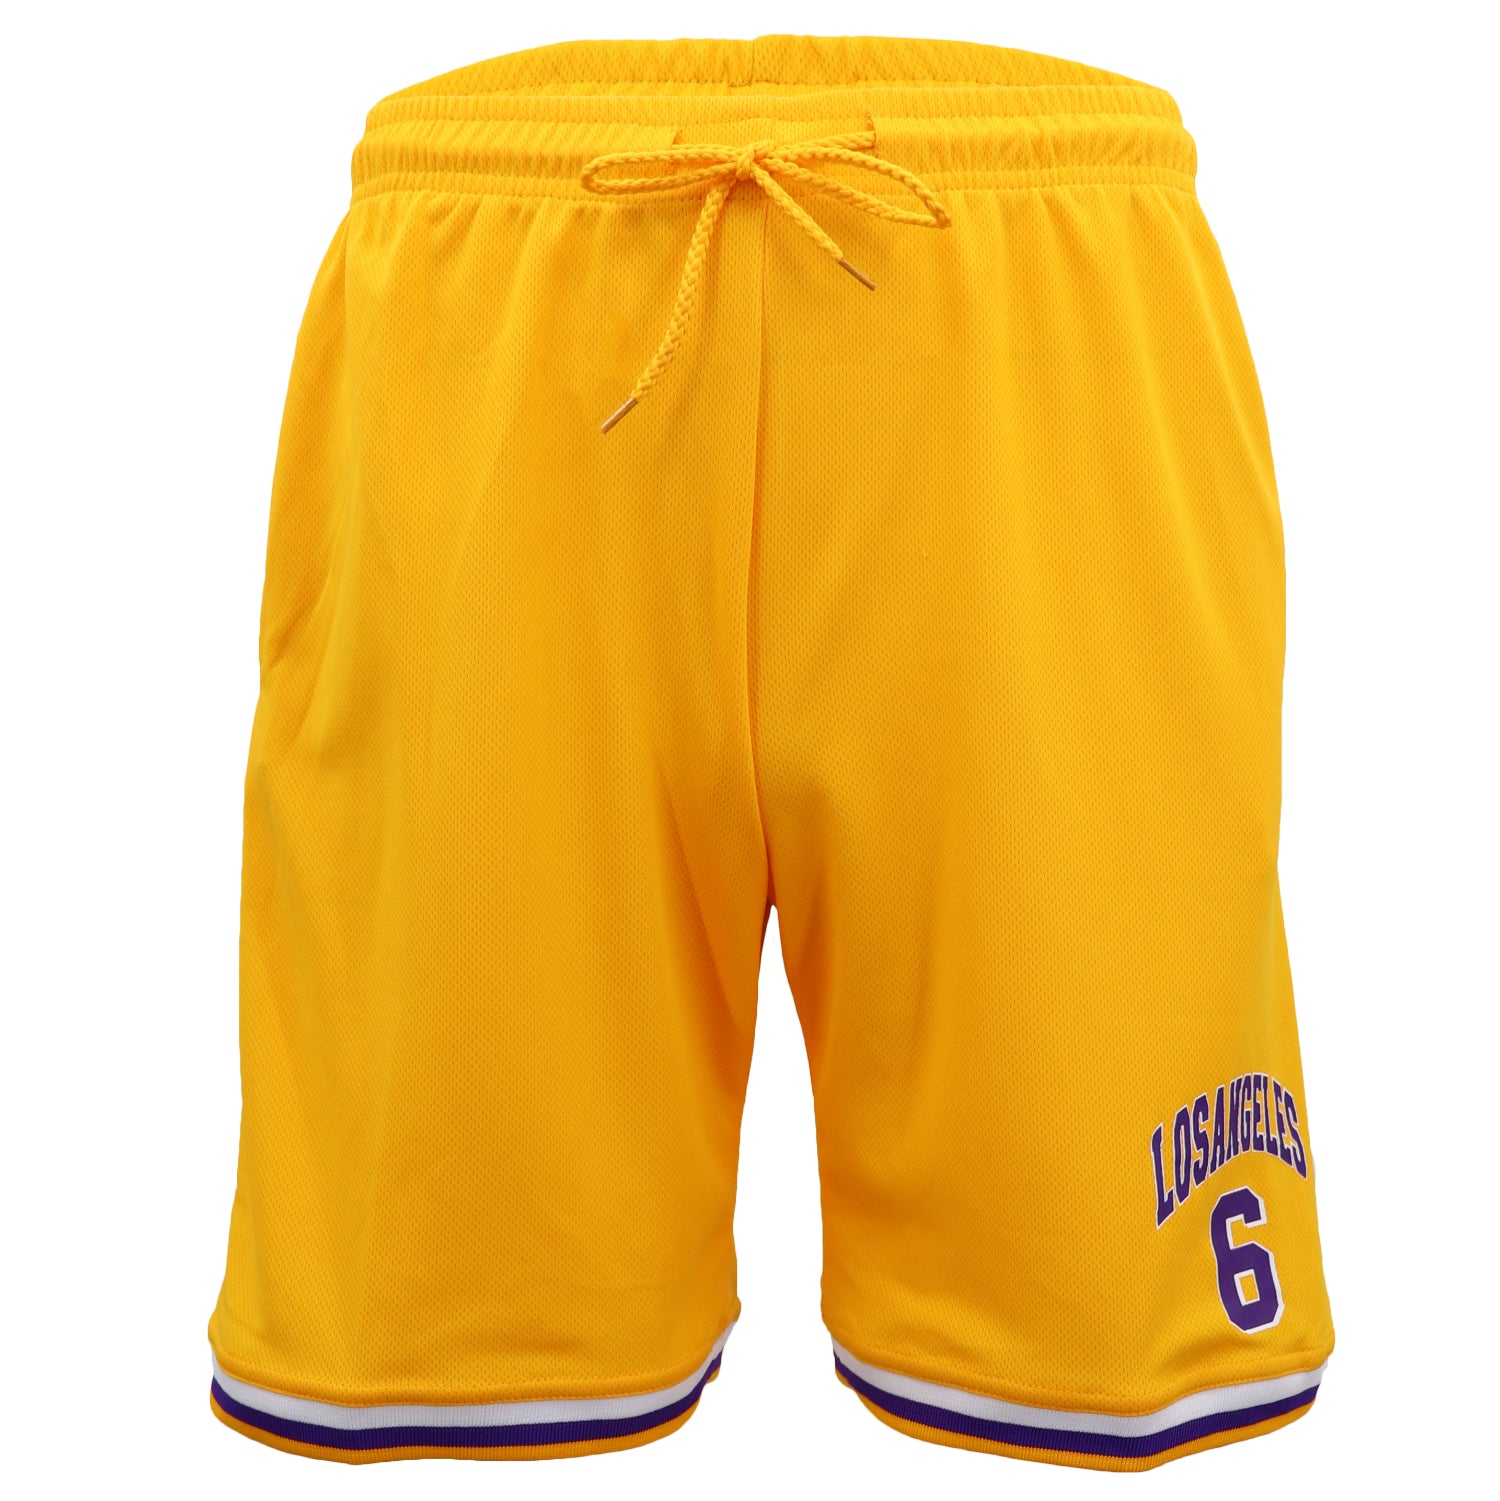 Men's Basketball Sports Shorts Gym Jogging Swim Board Boxing Sweat Casual Pants, Yellow - Los Angeles 6, L